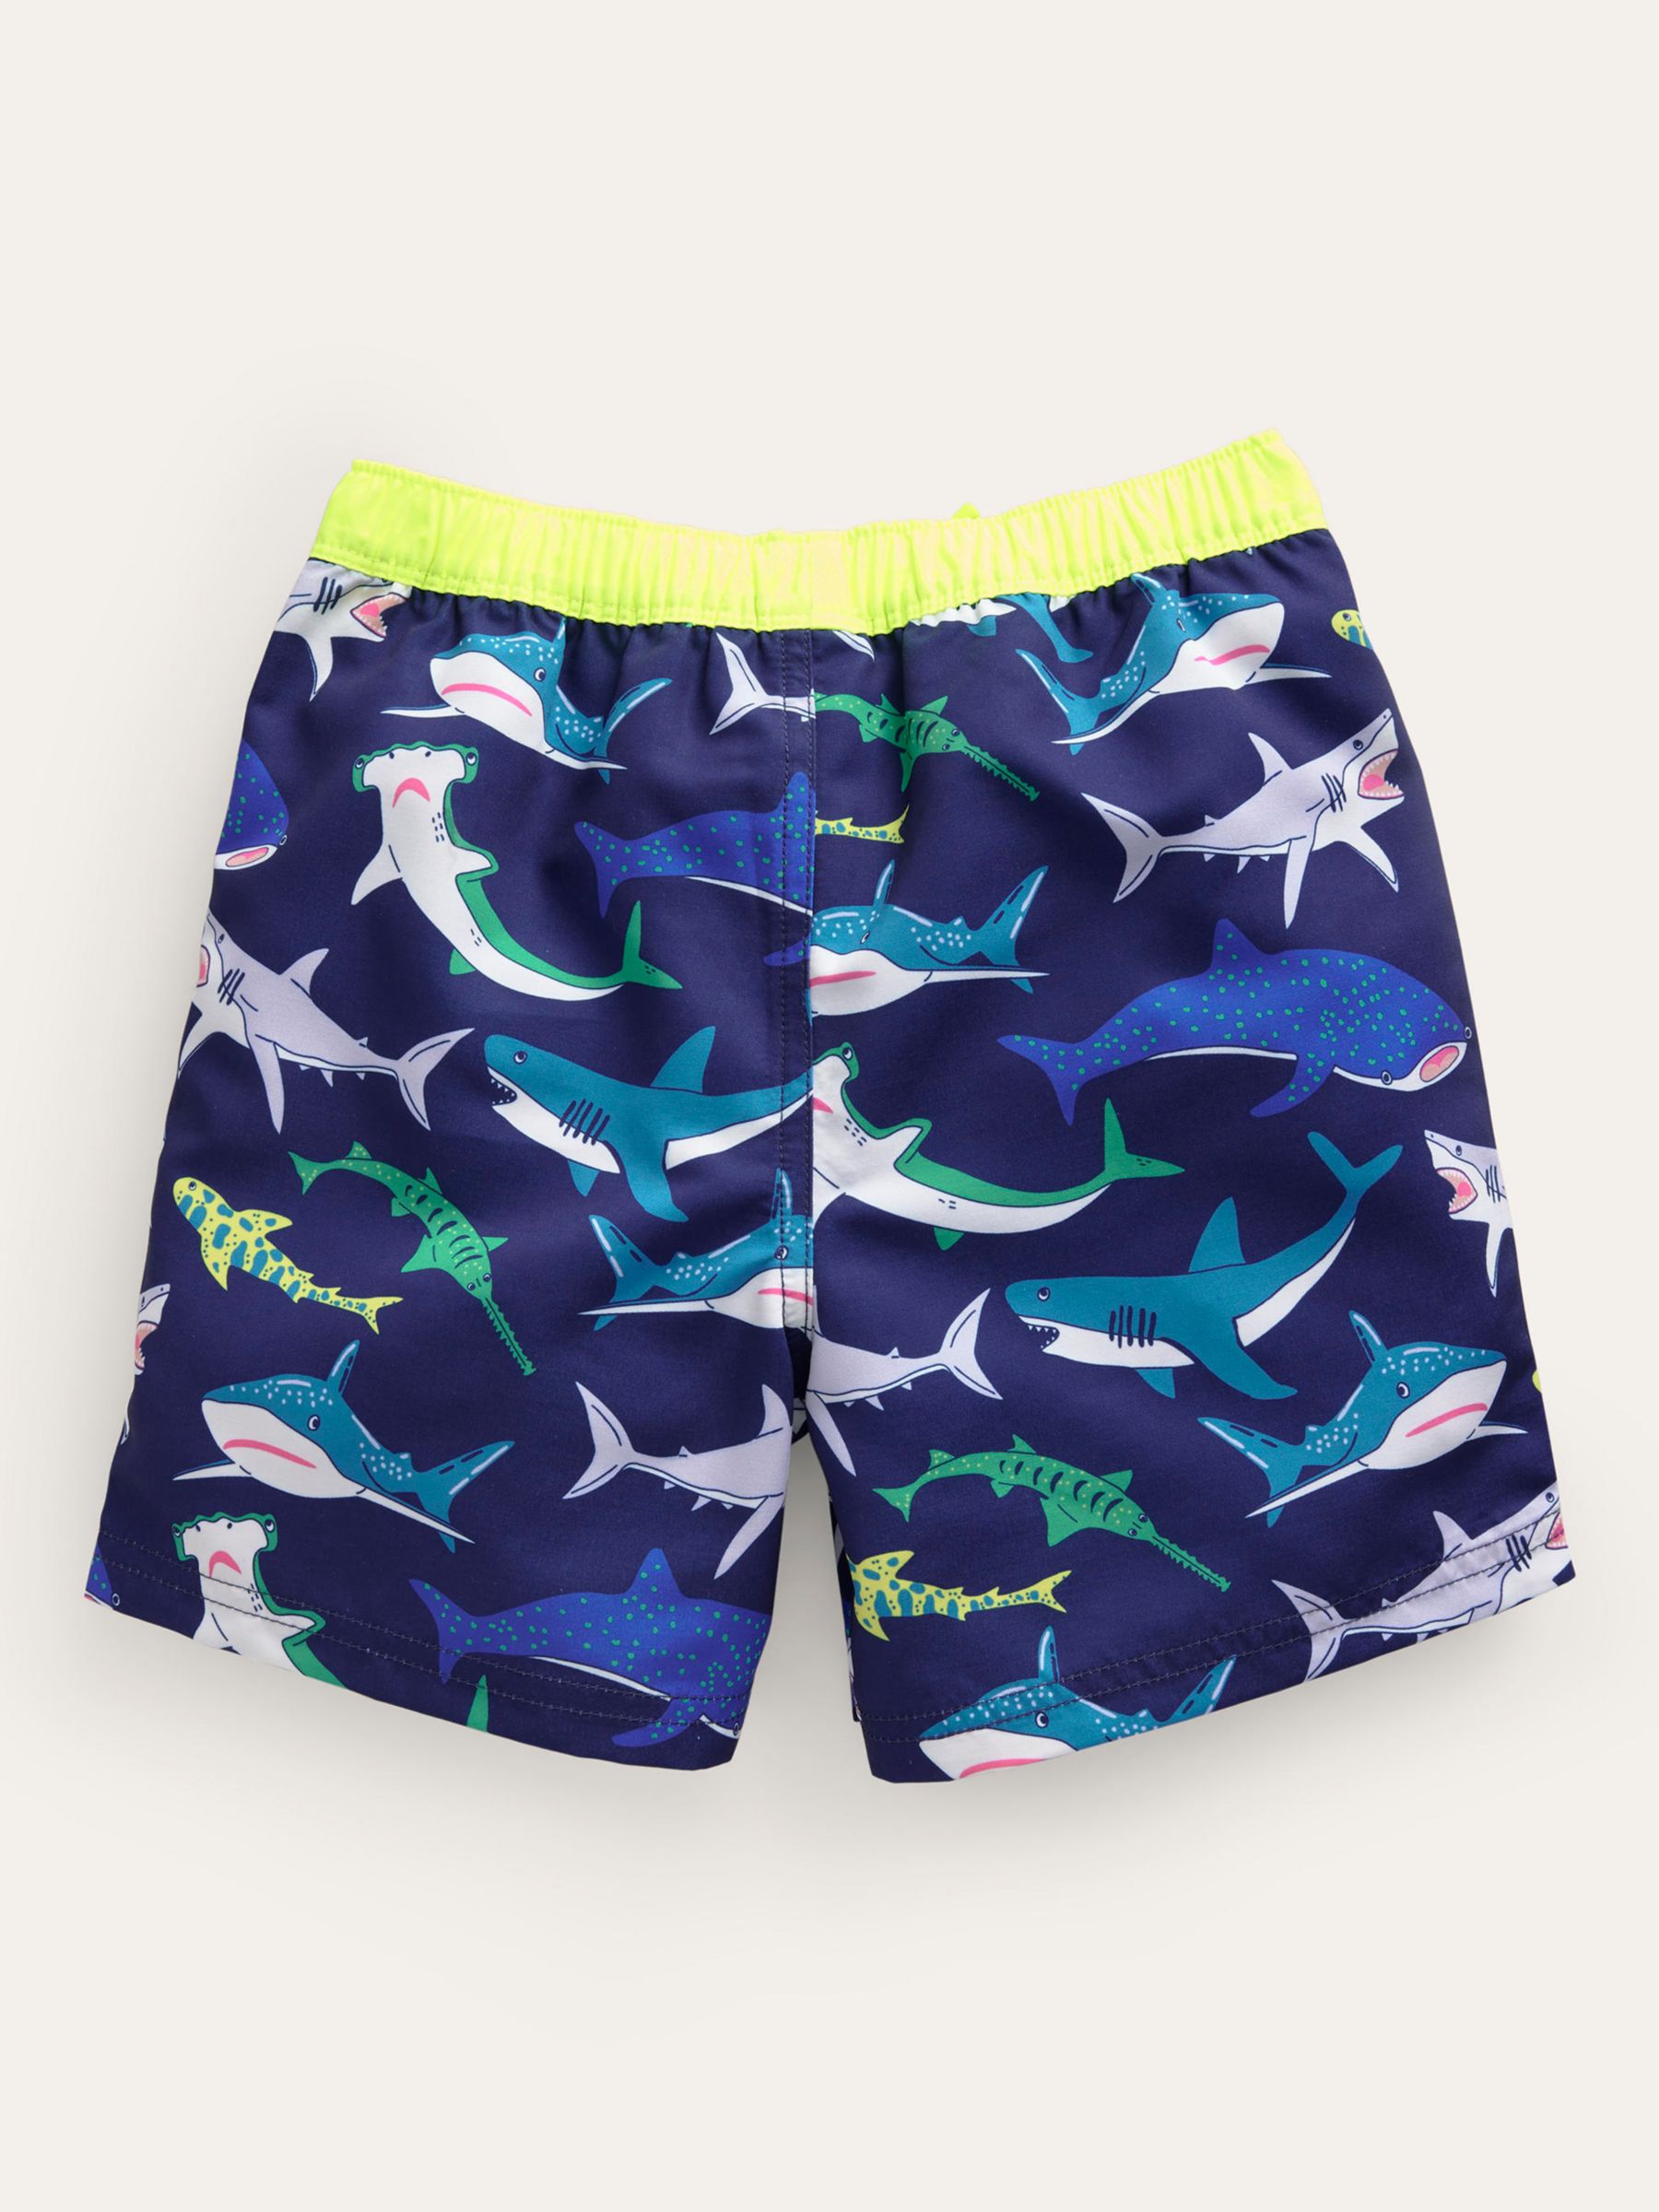 Mini Boden Kids' Printed Swim Shorts, Multi Sharks, 3-4 years